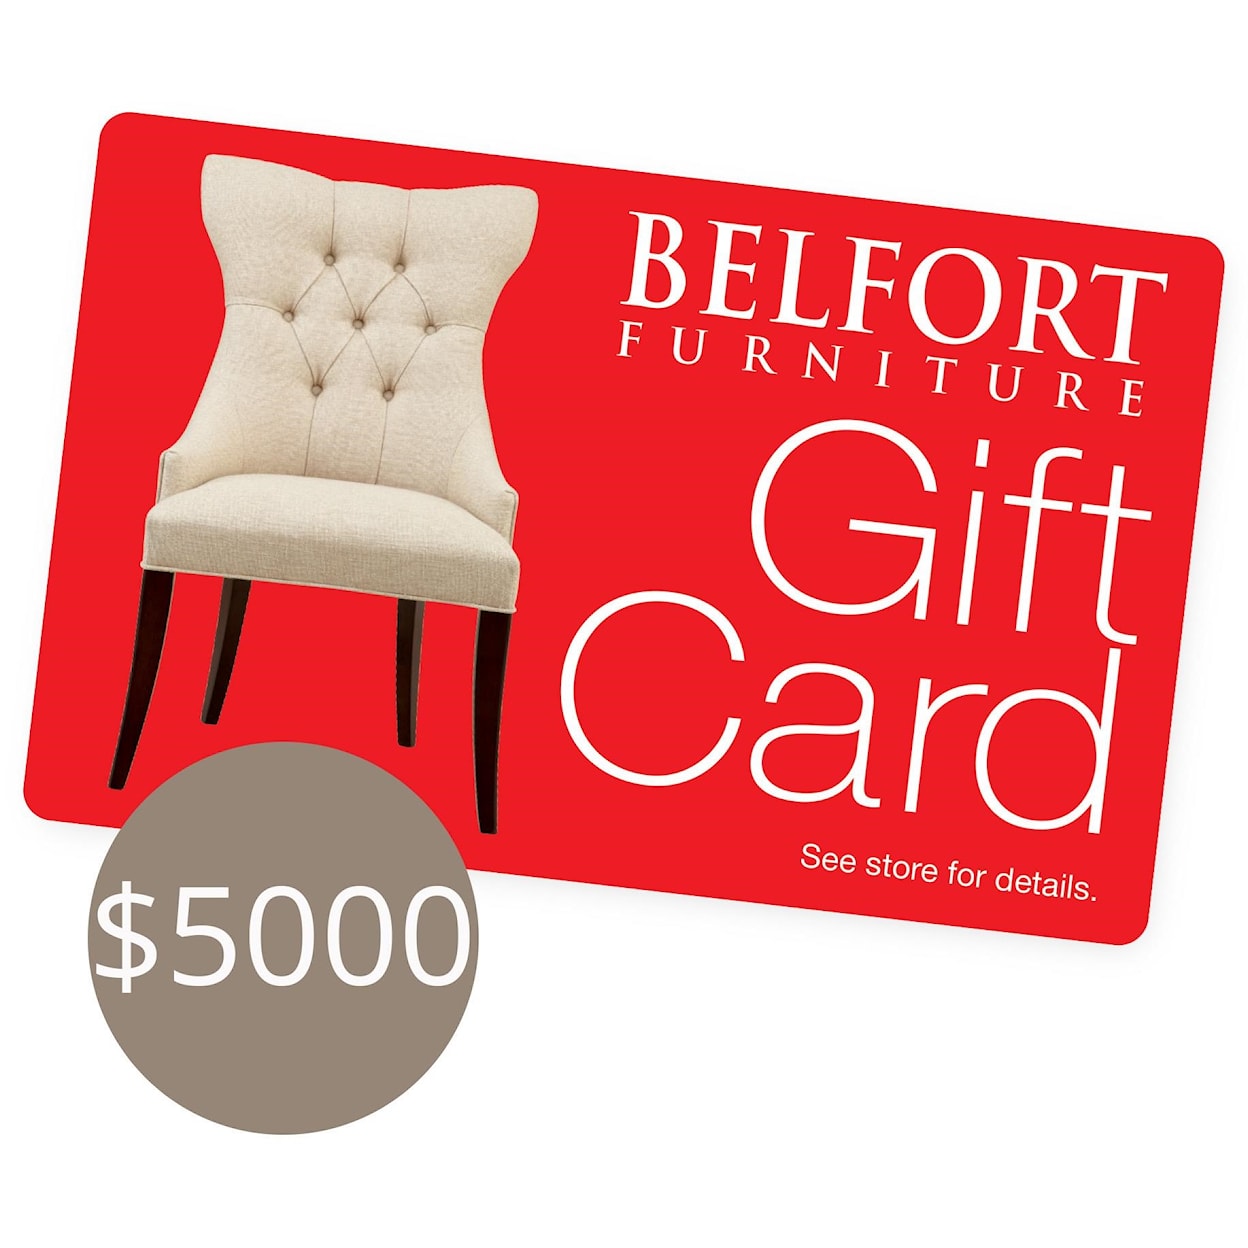 Belfort Furniture Gift Cards $5000 Belfort Gift Card